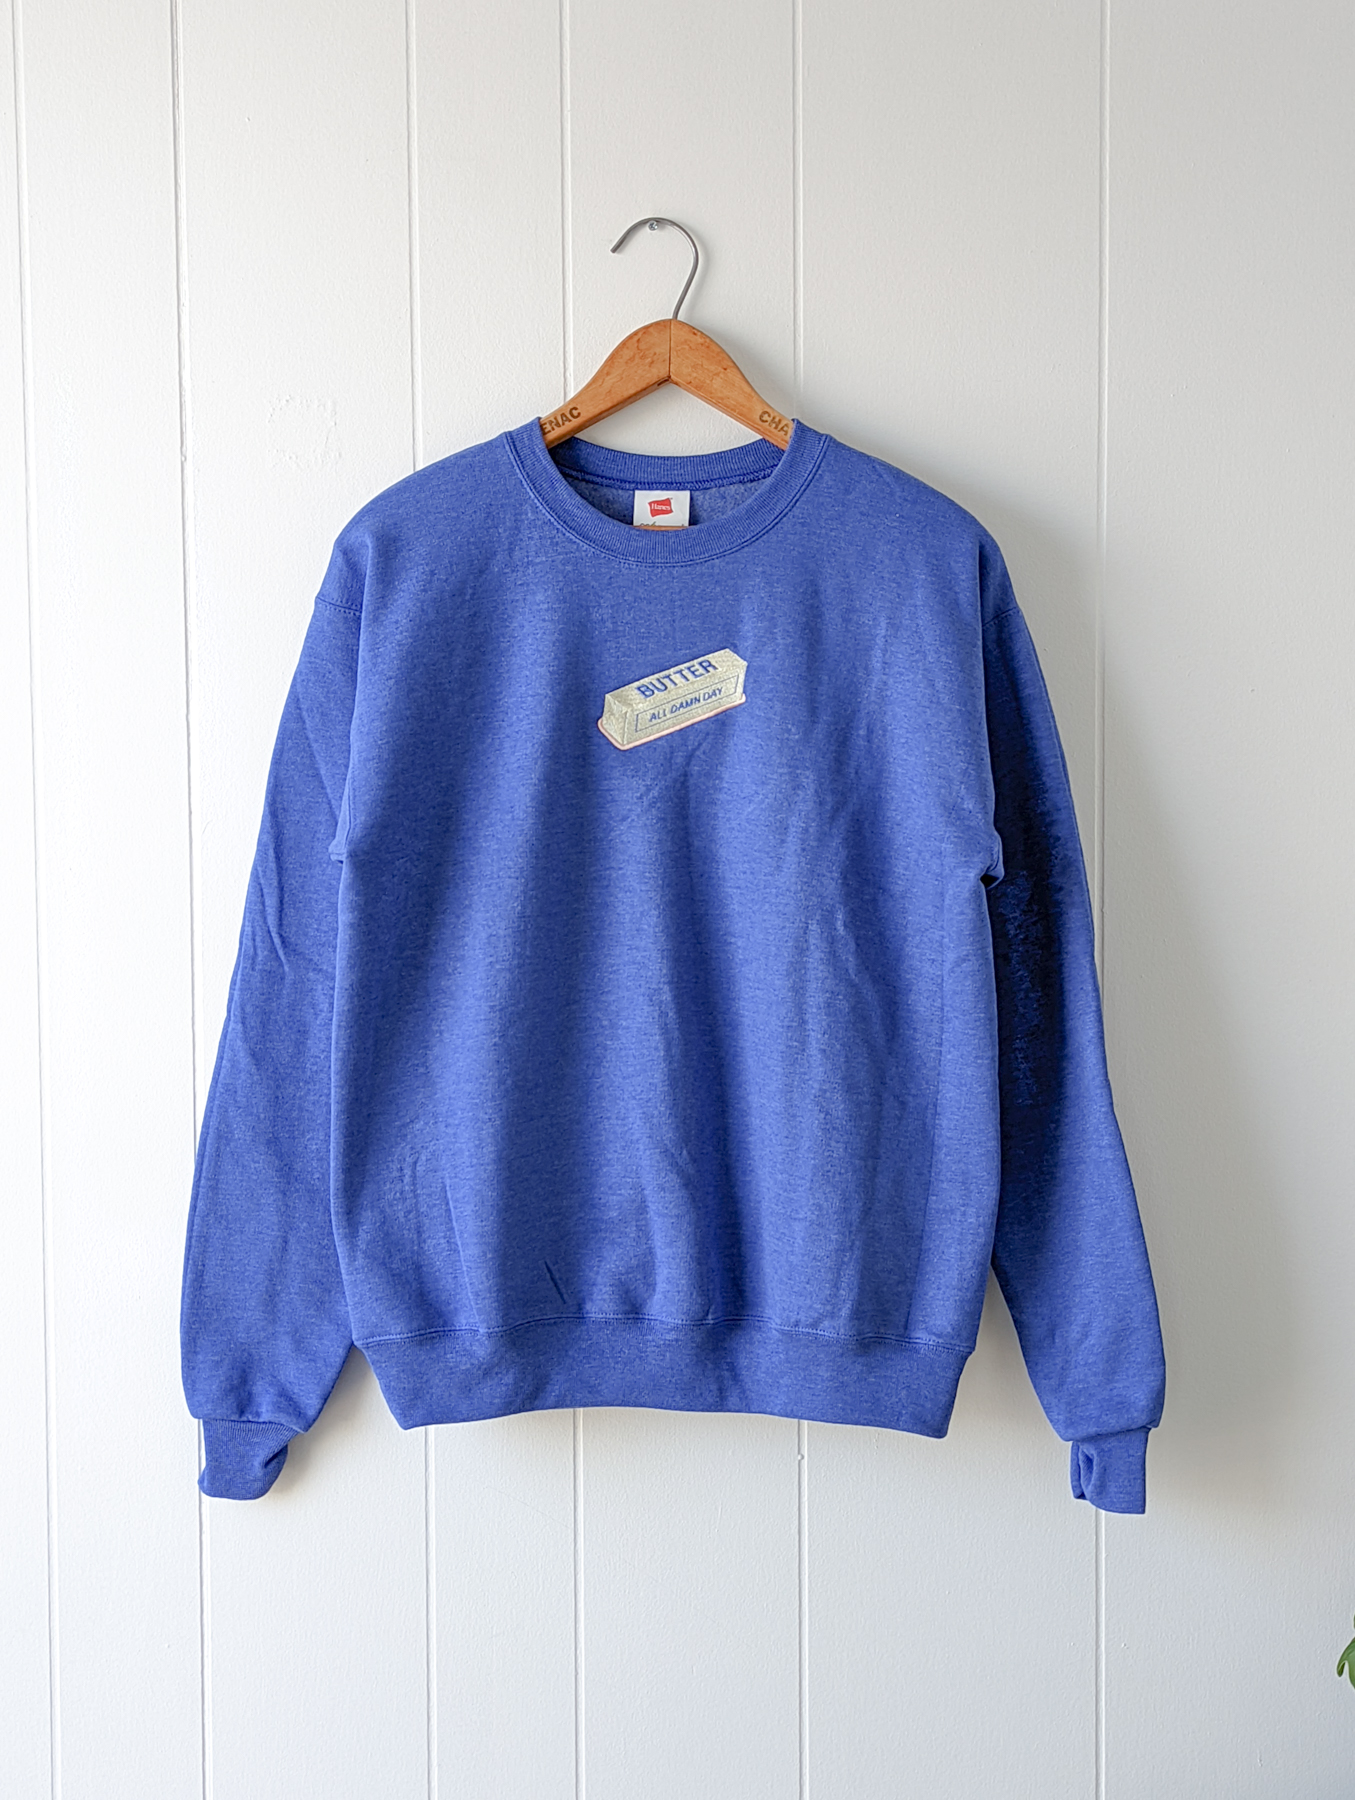 Stick of Butter Sweatshirt - Crewel and Unusual